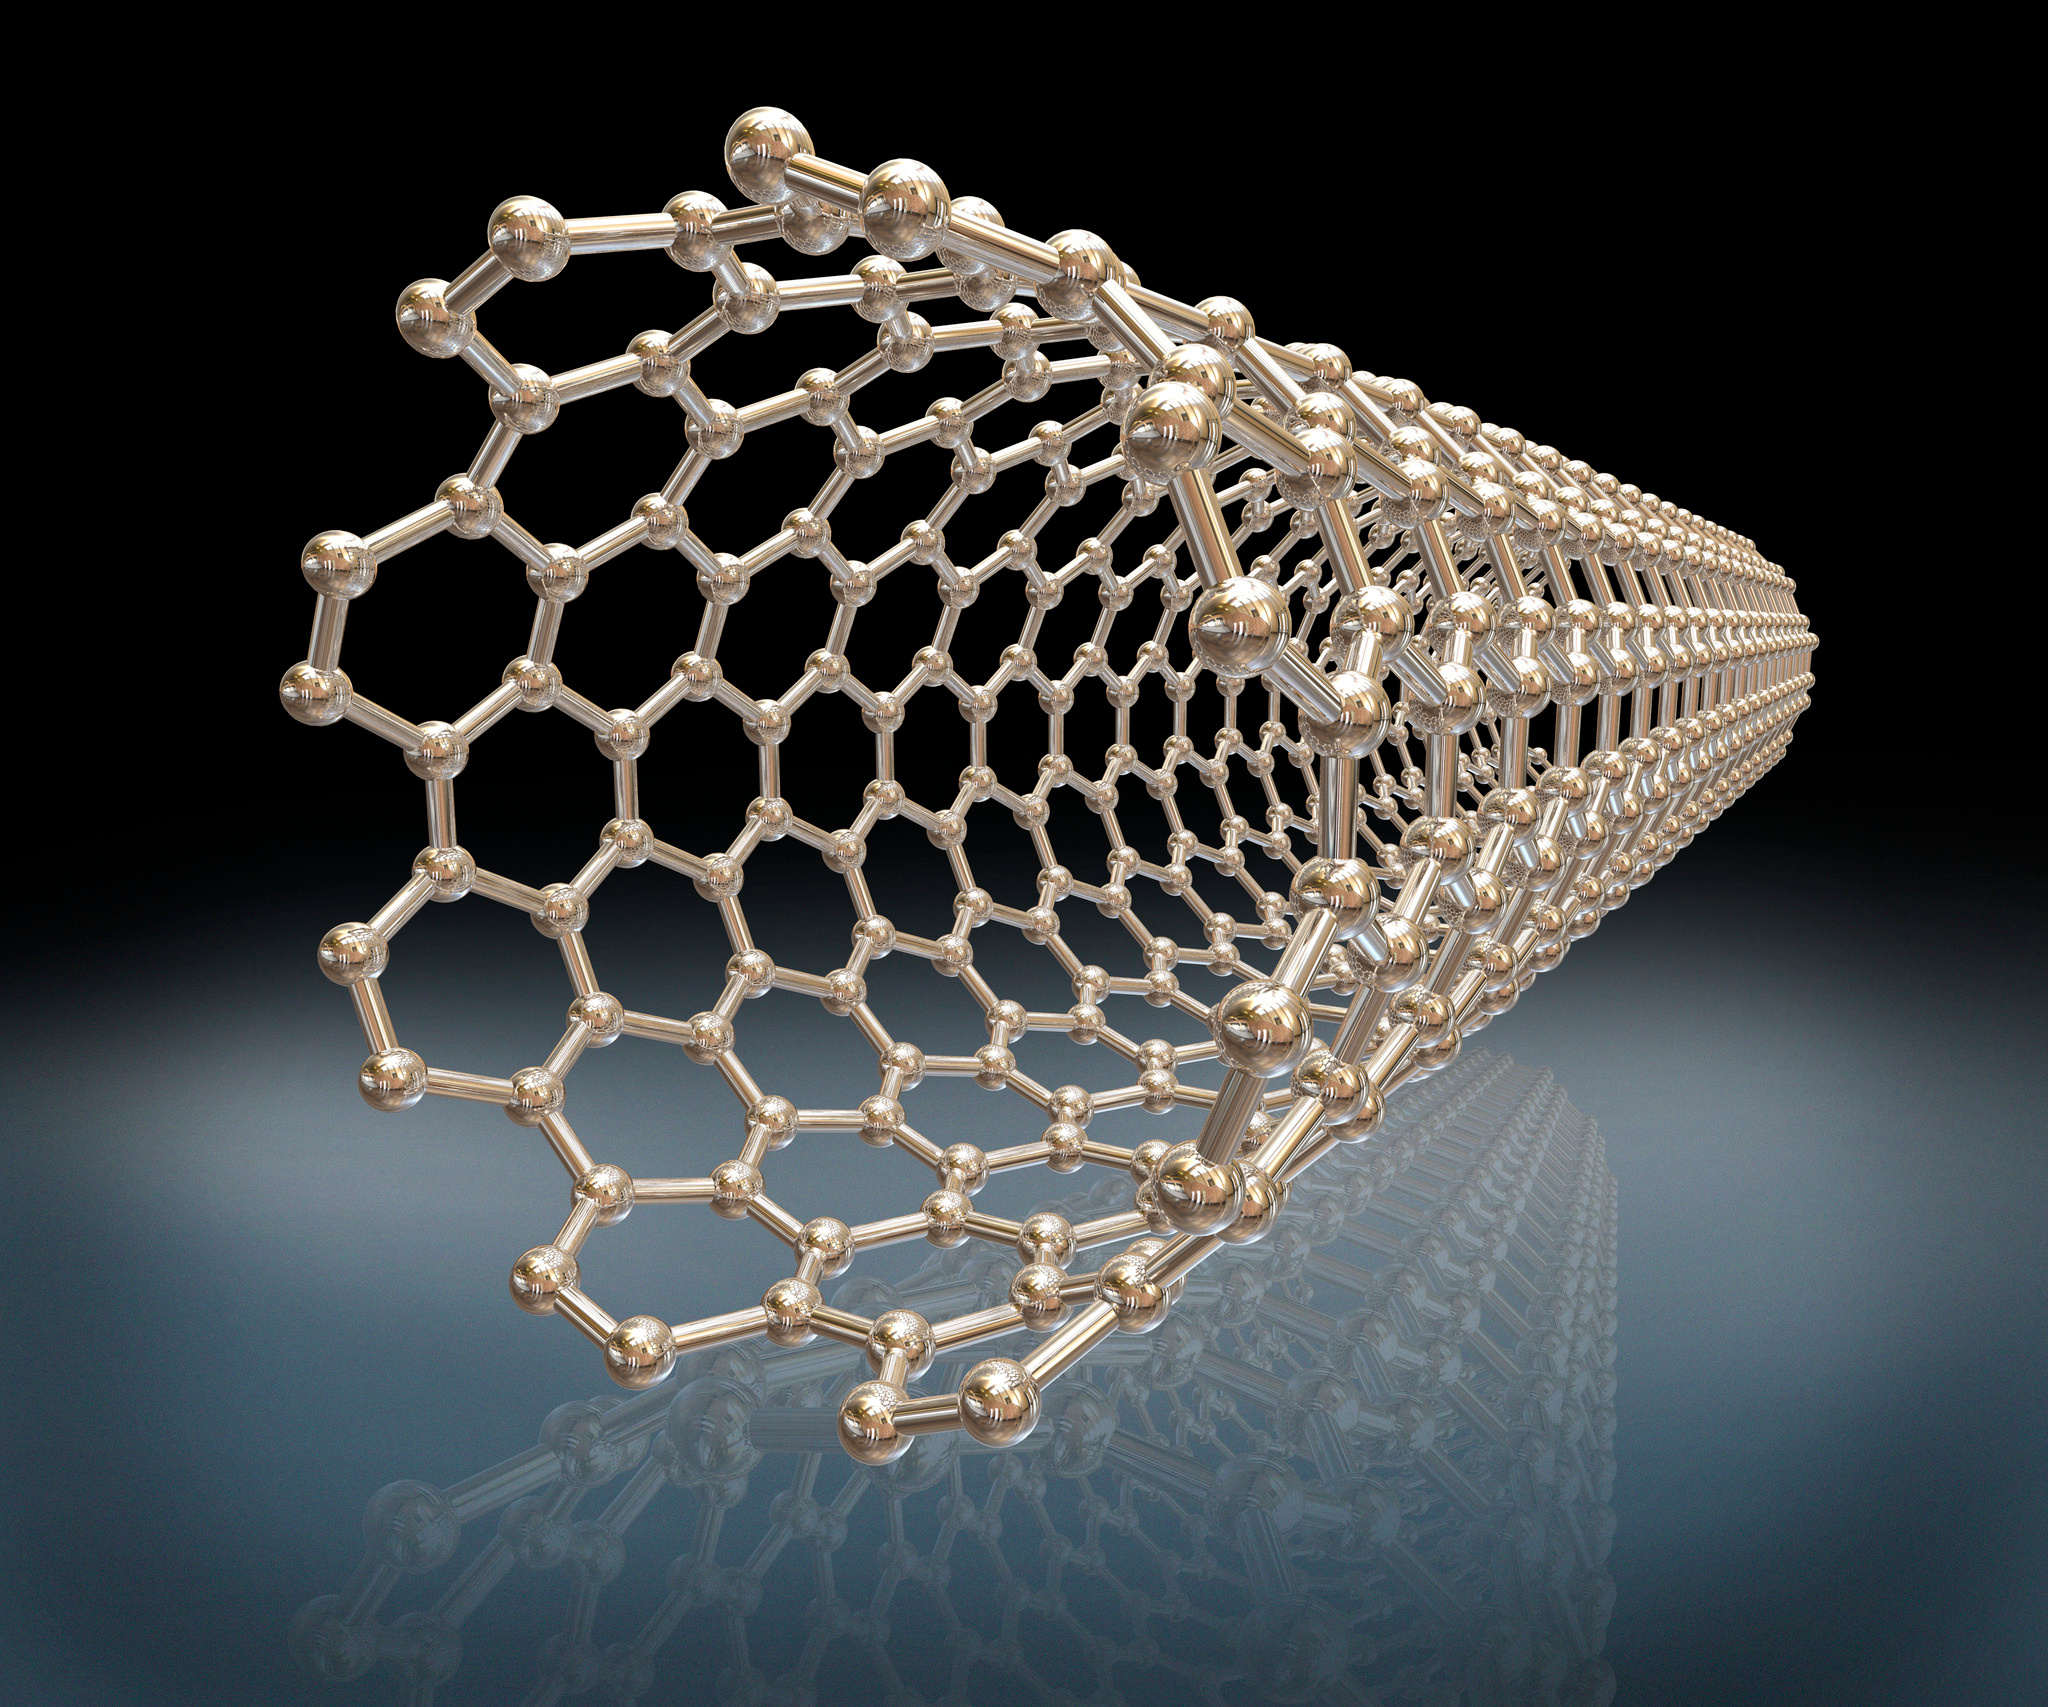 "Carbon nanotube